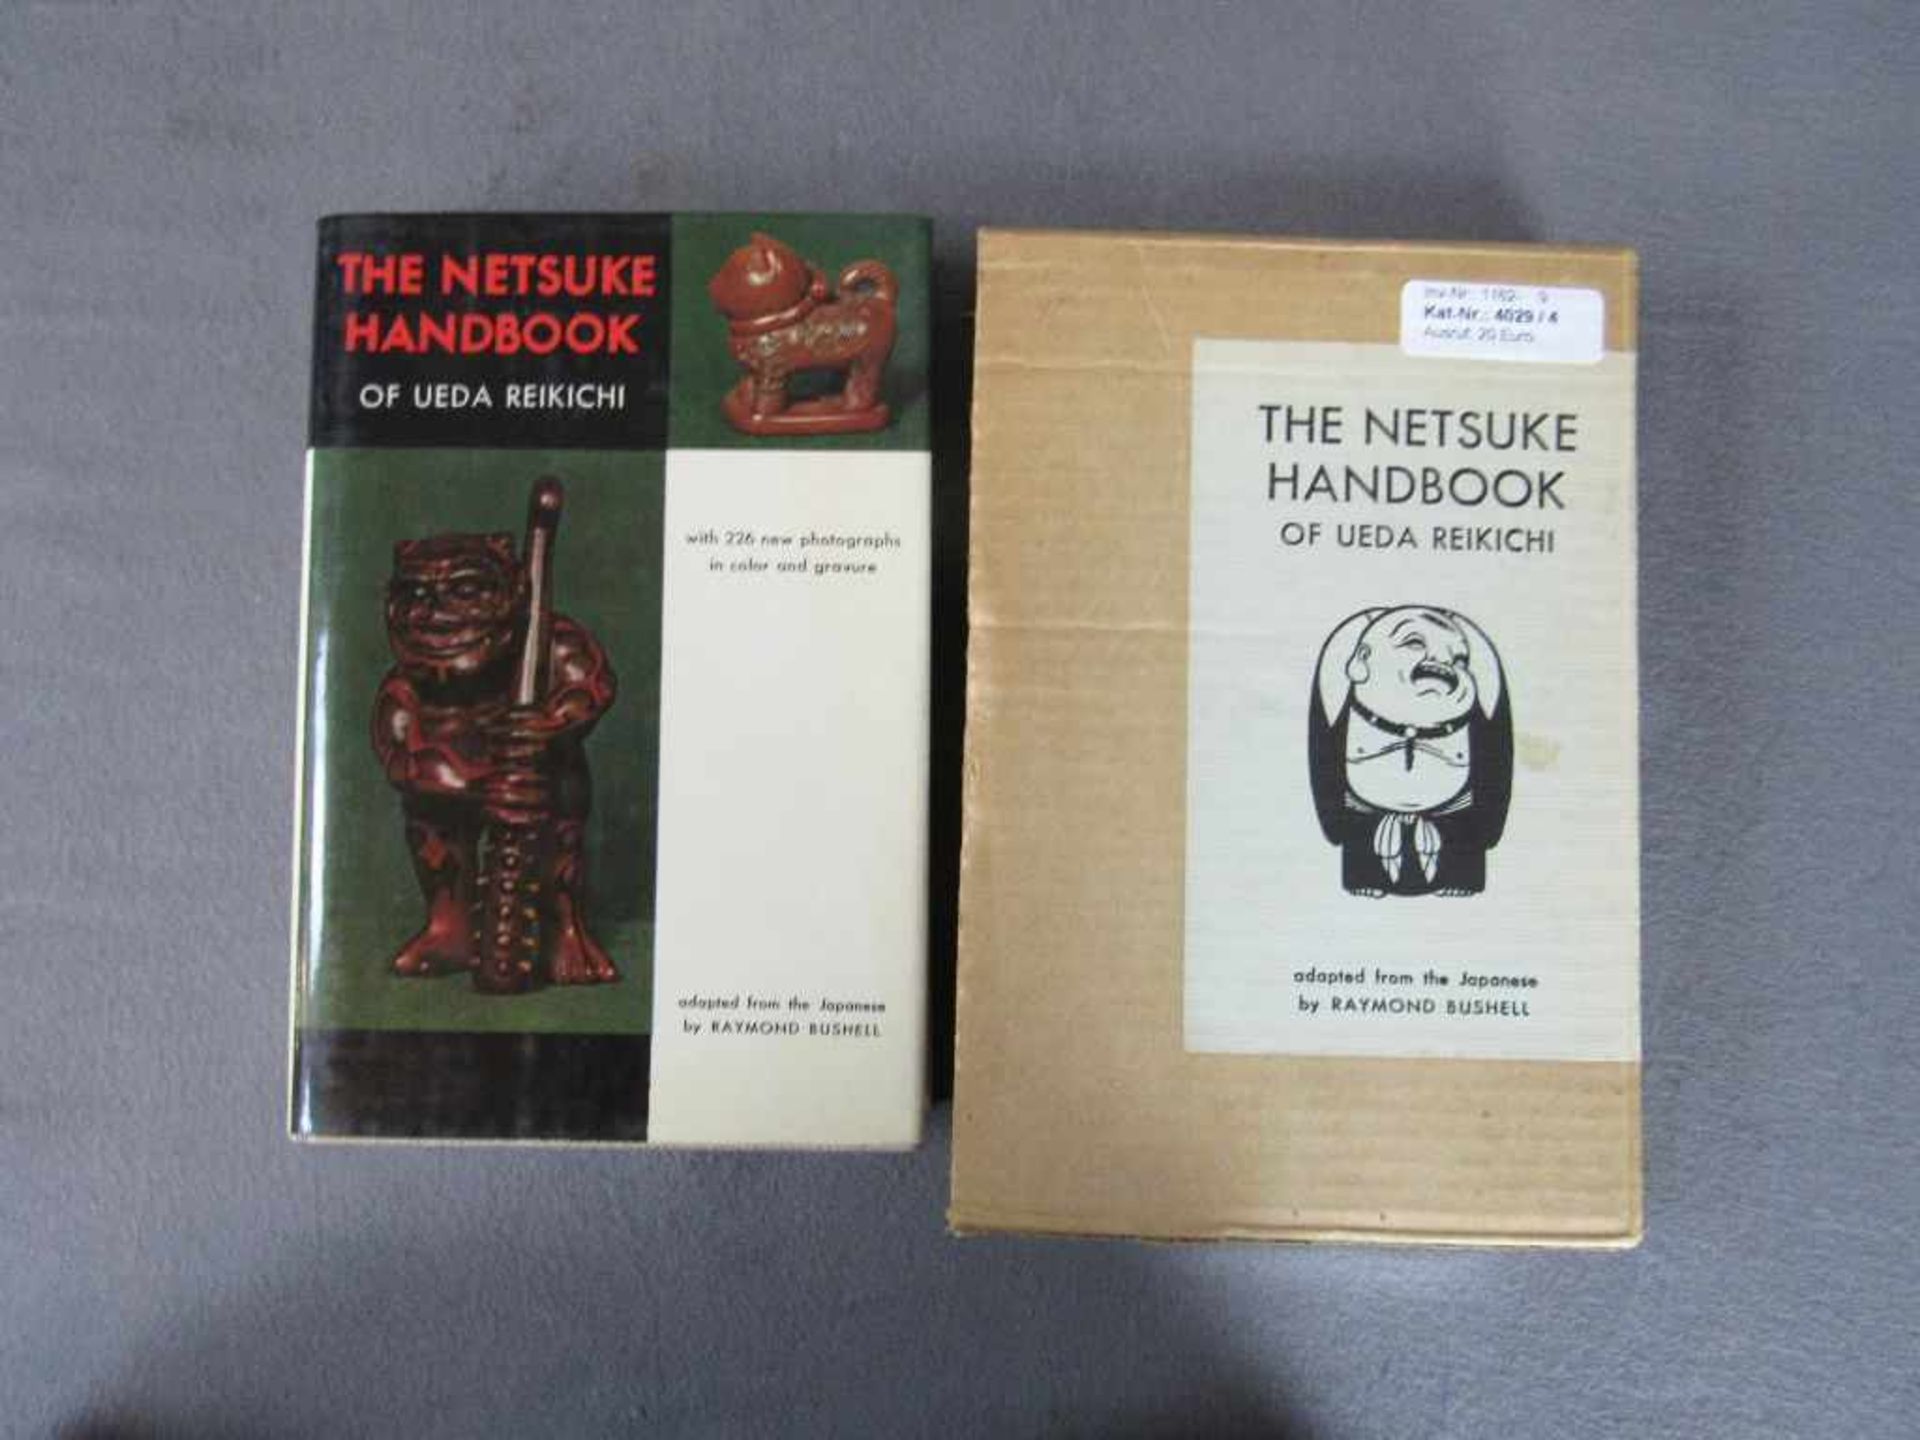 Buch Netsuke- The Netsuke Handbook of Ueda Reikichi v.1971